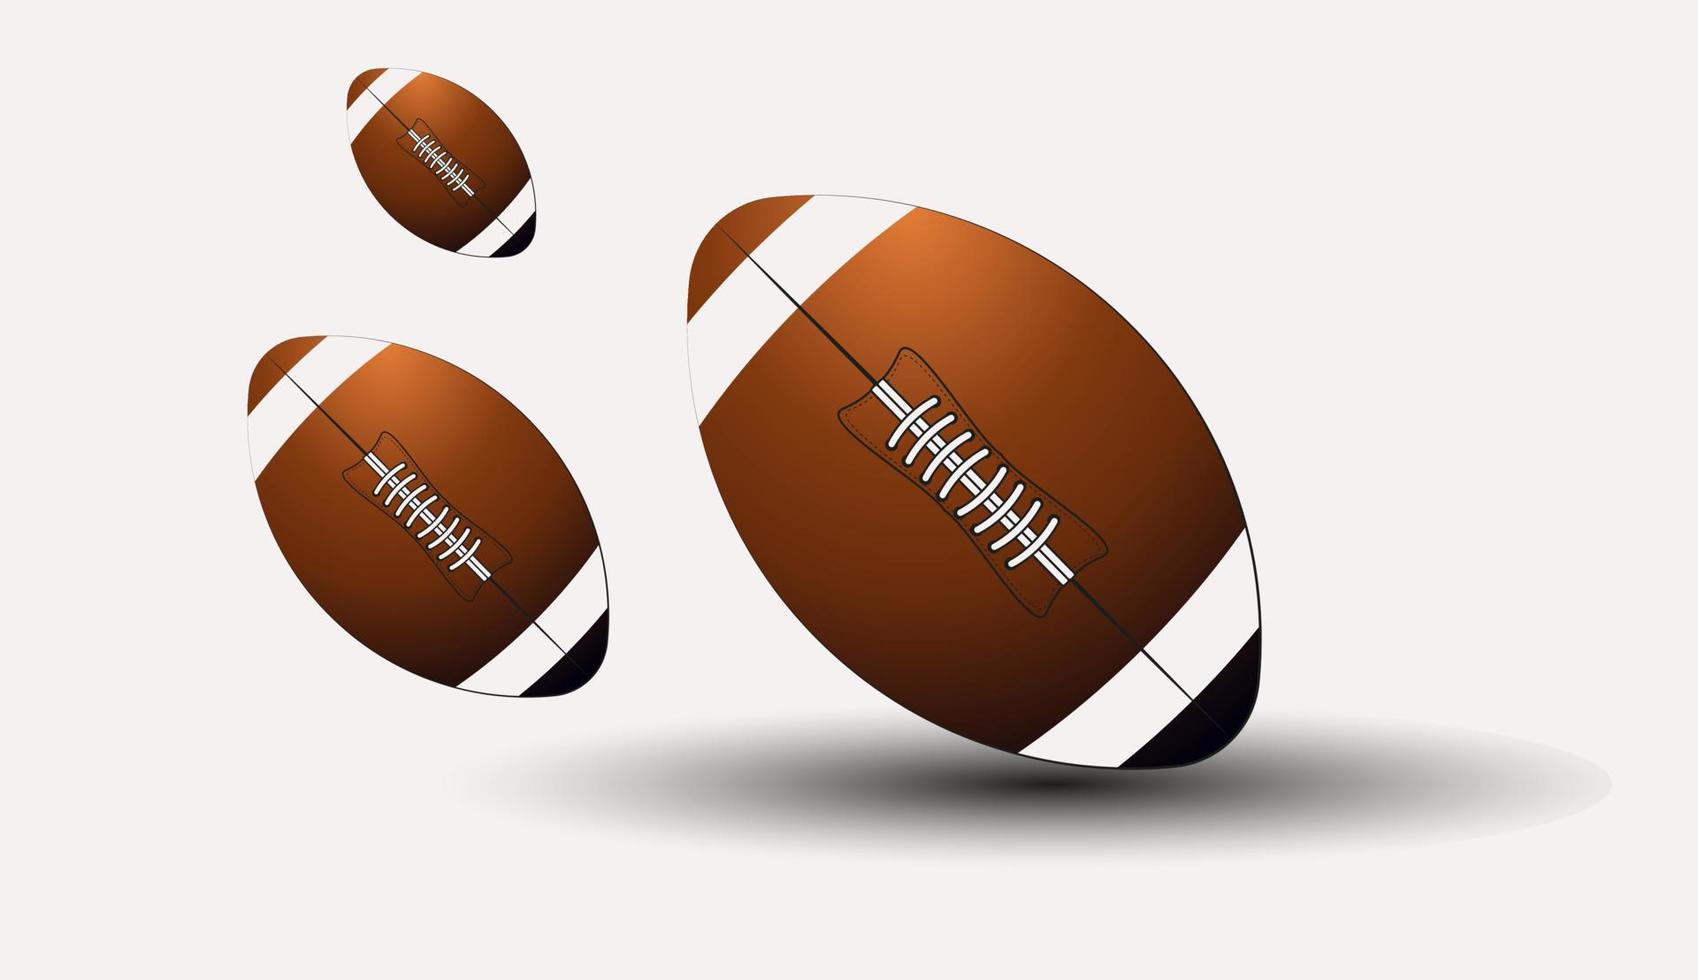 reeks van amerikaans Amerikaans voetbal bal concept, drie Amerikaans voetbal bal Aan een geïsoleerd achtergrond, voor groet kaart, banier, poster. vector illustratie